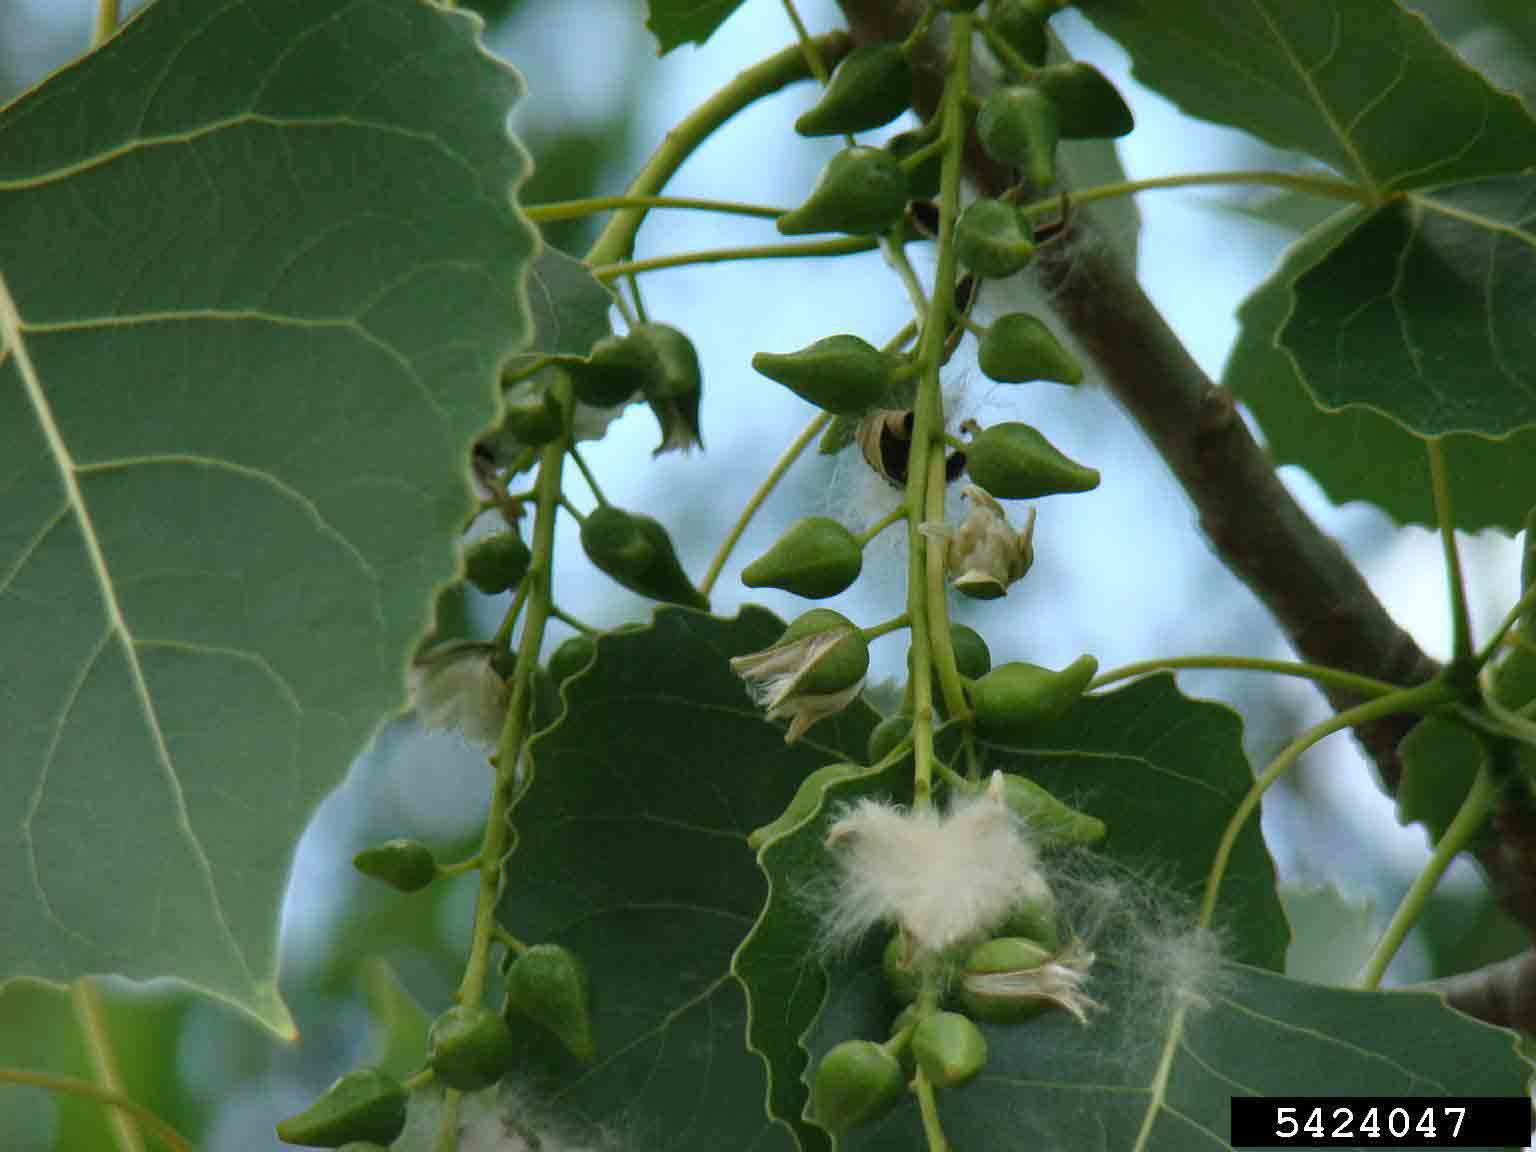 Eastern cottonwood fruit in drooping cluster